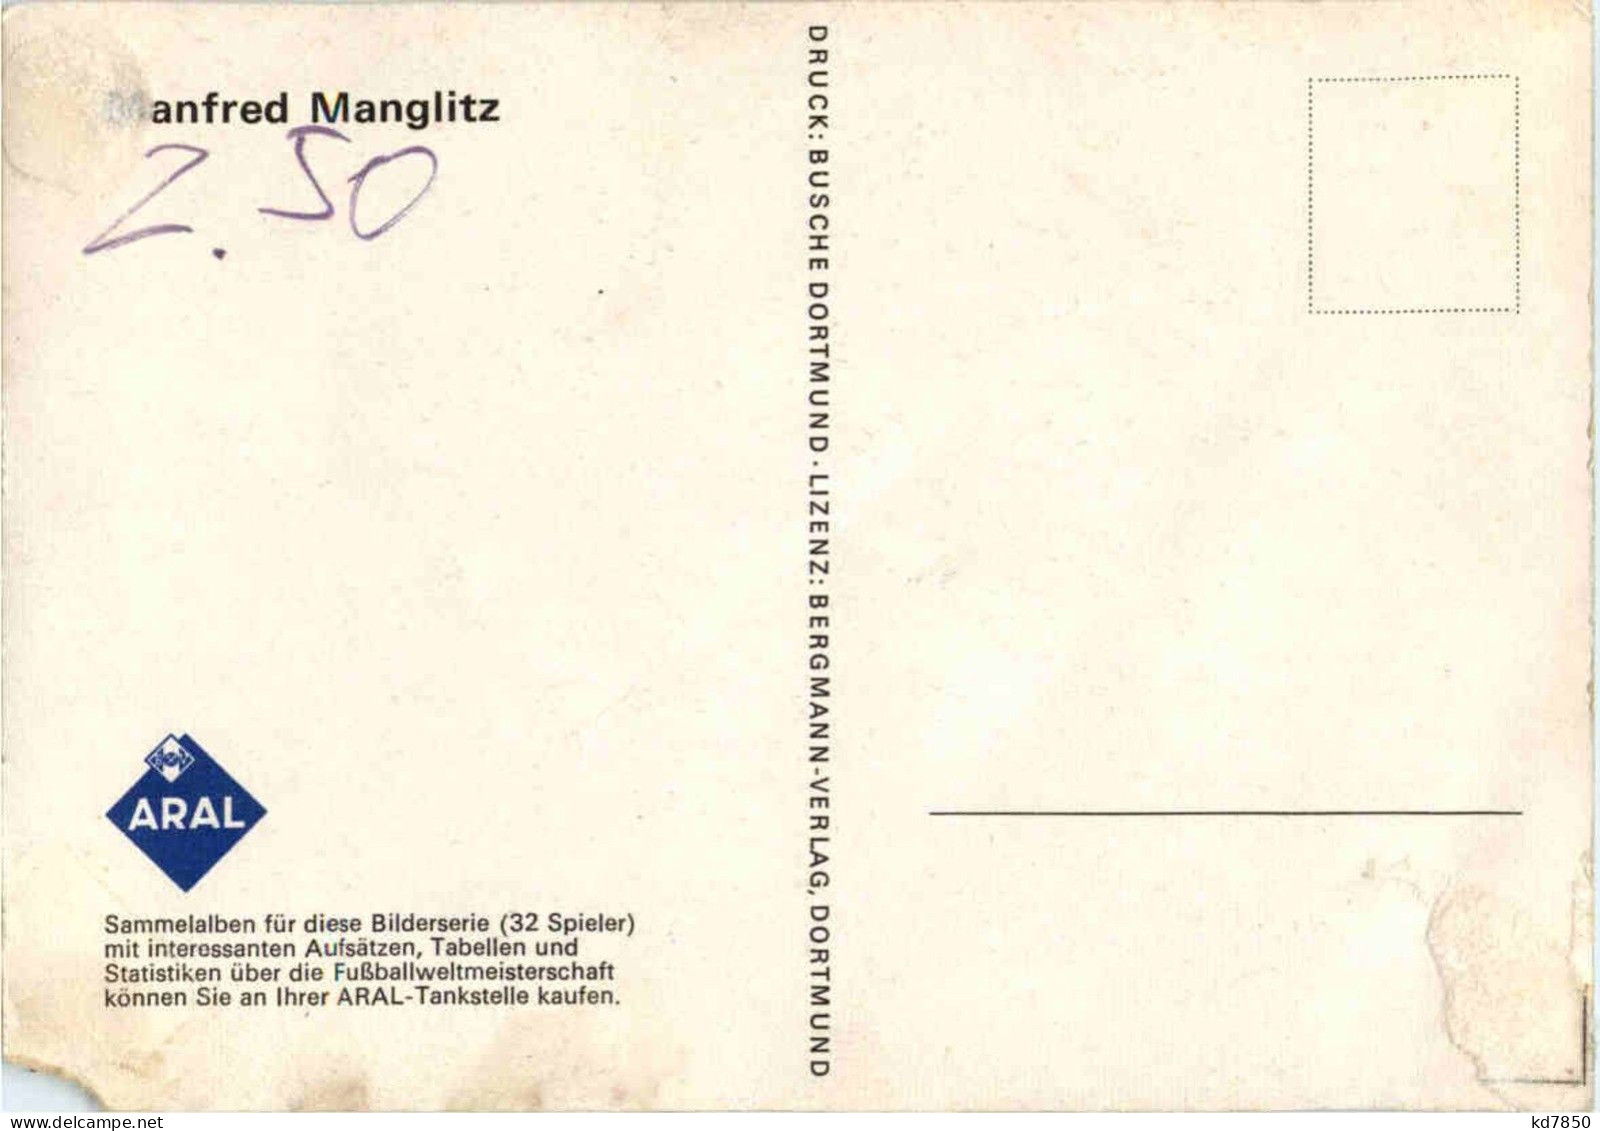 Manfred Manglitz - Soccer